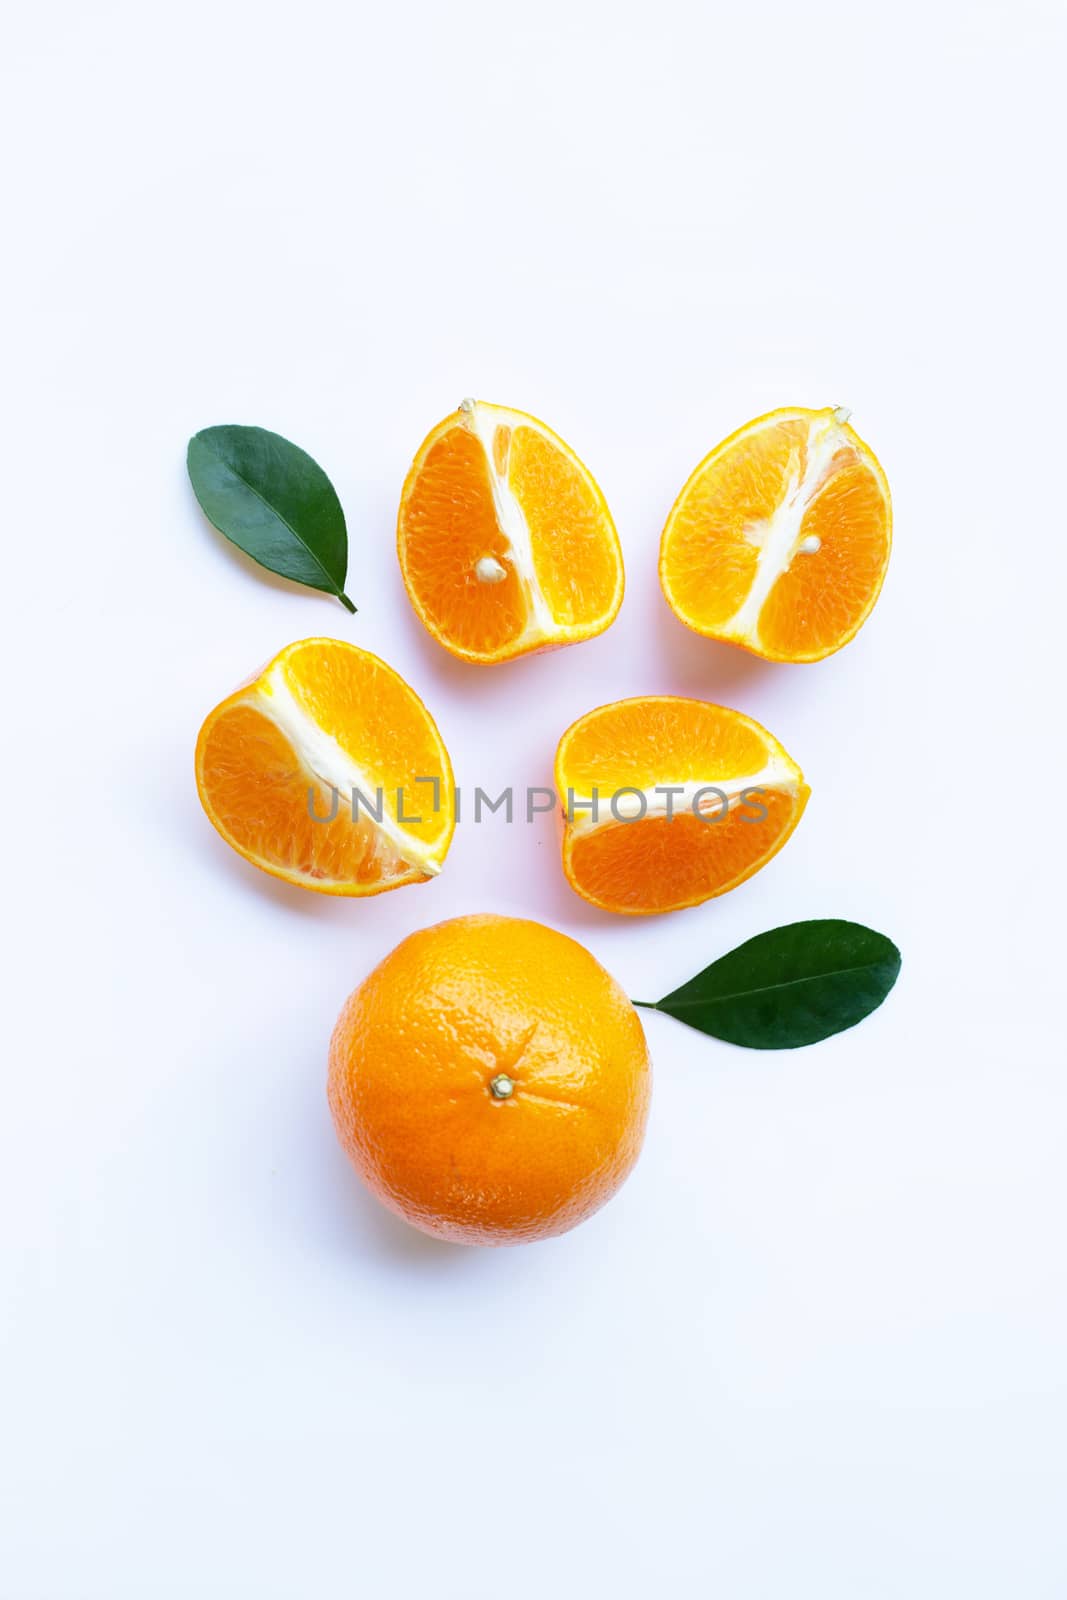 Fresh orange citrus fruit with green leaves on white background. 